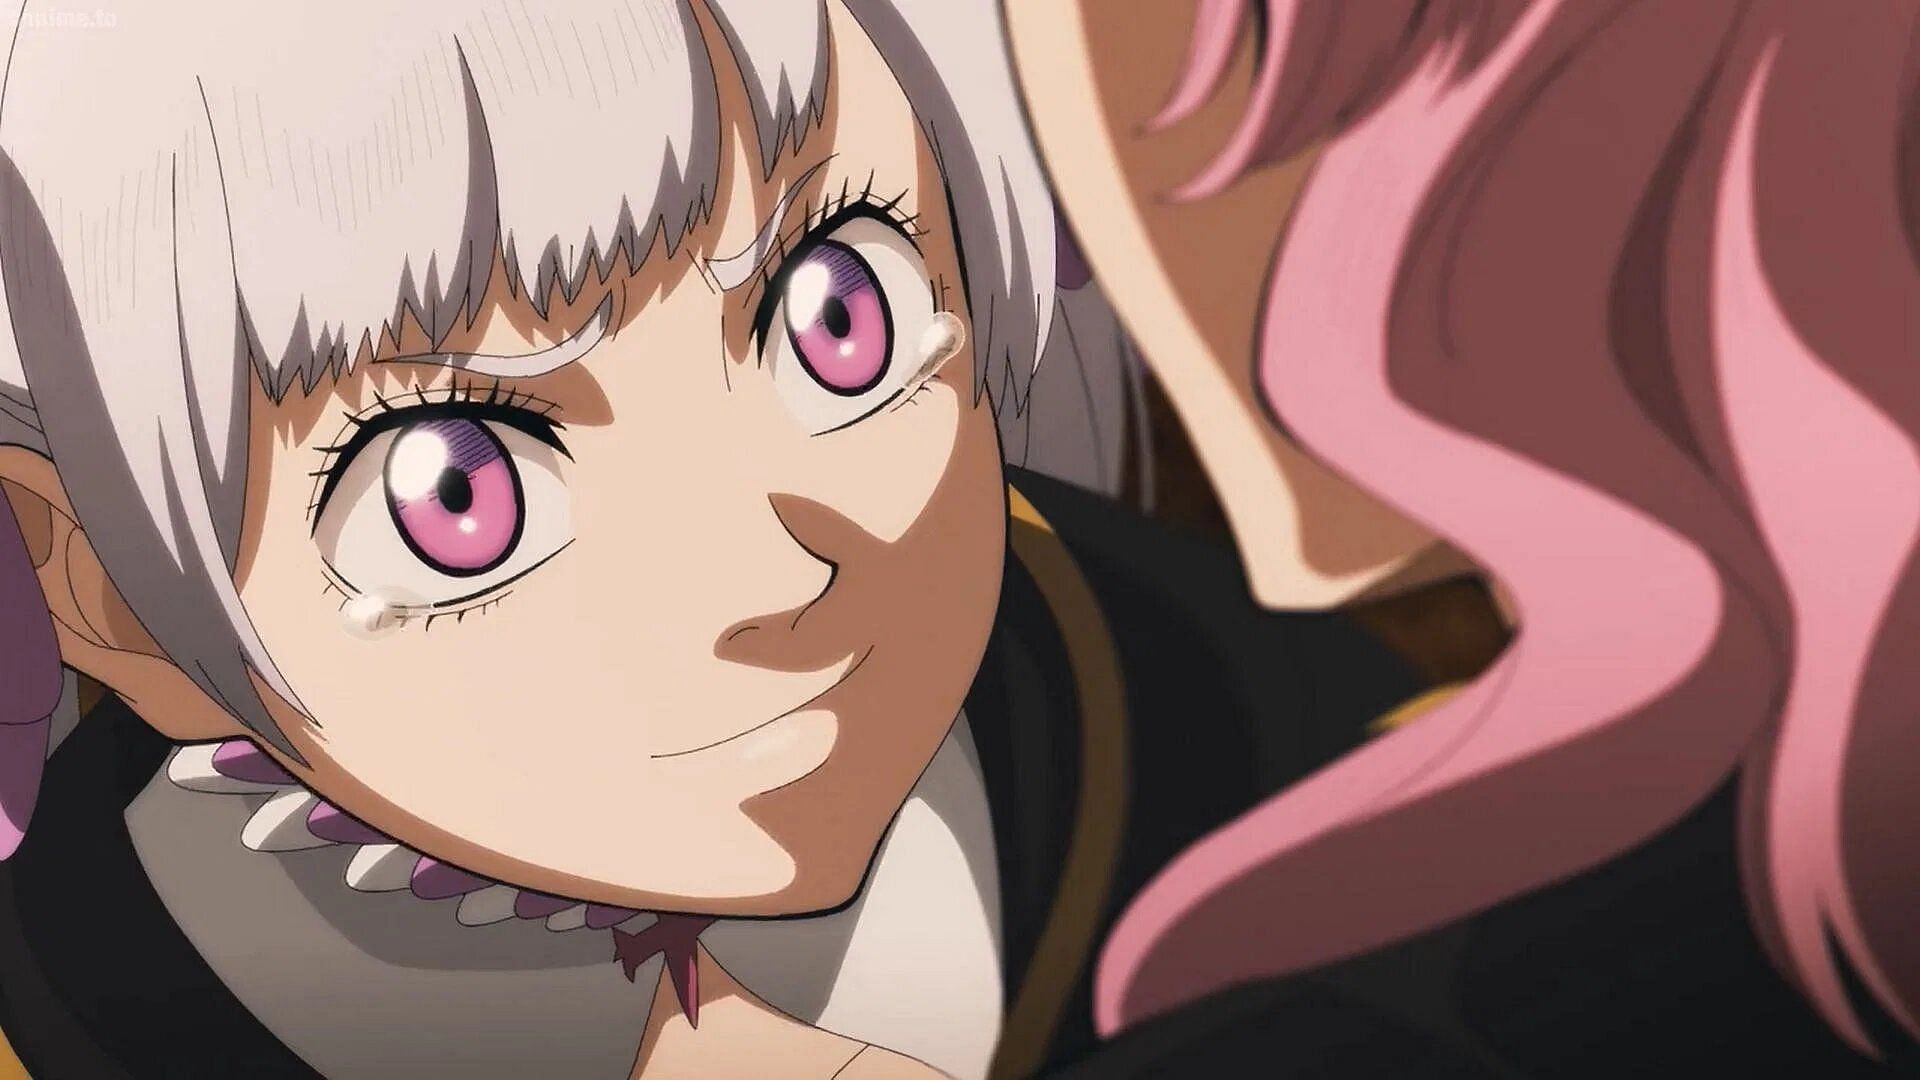 Noelle is among the anime characters compared to Sakura (Image via Studio Pierrot)